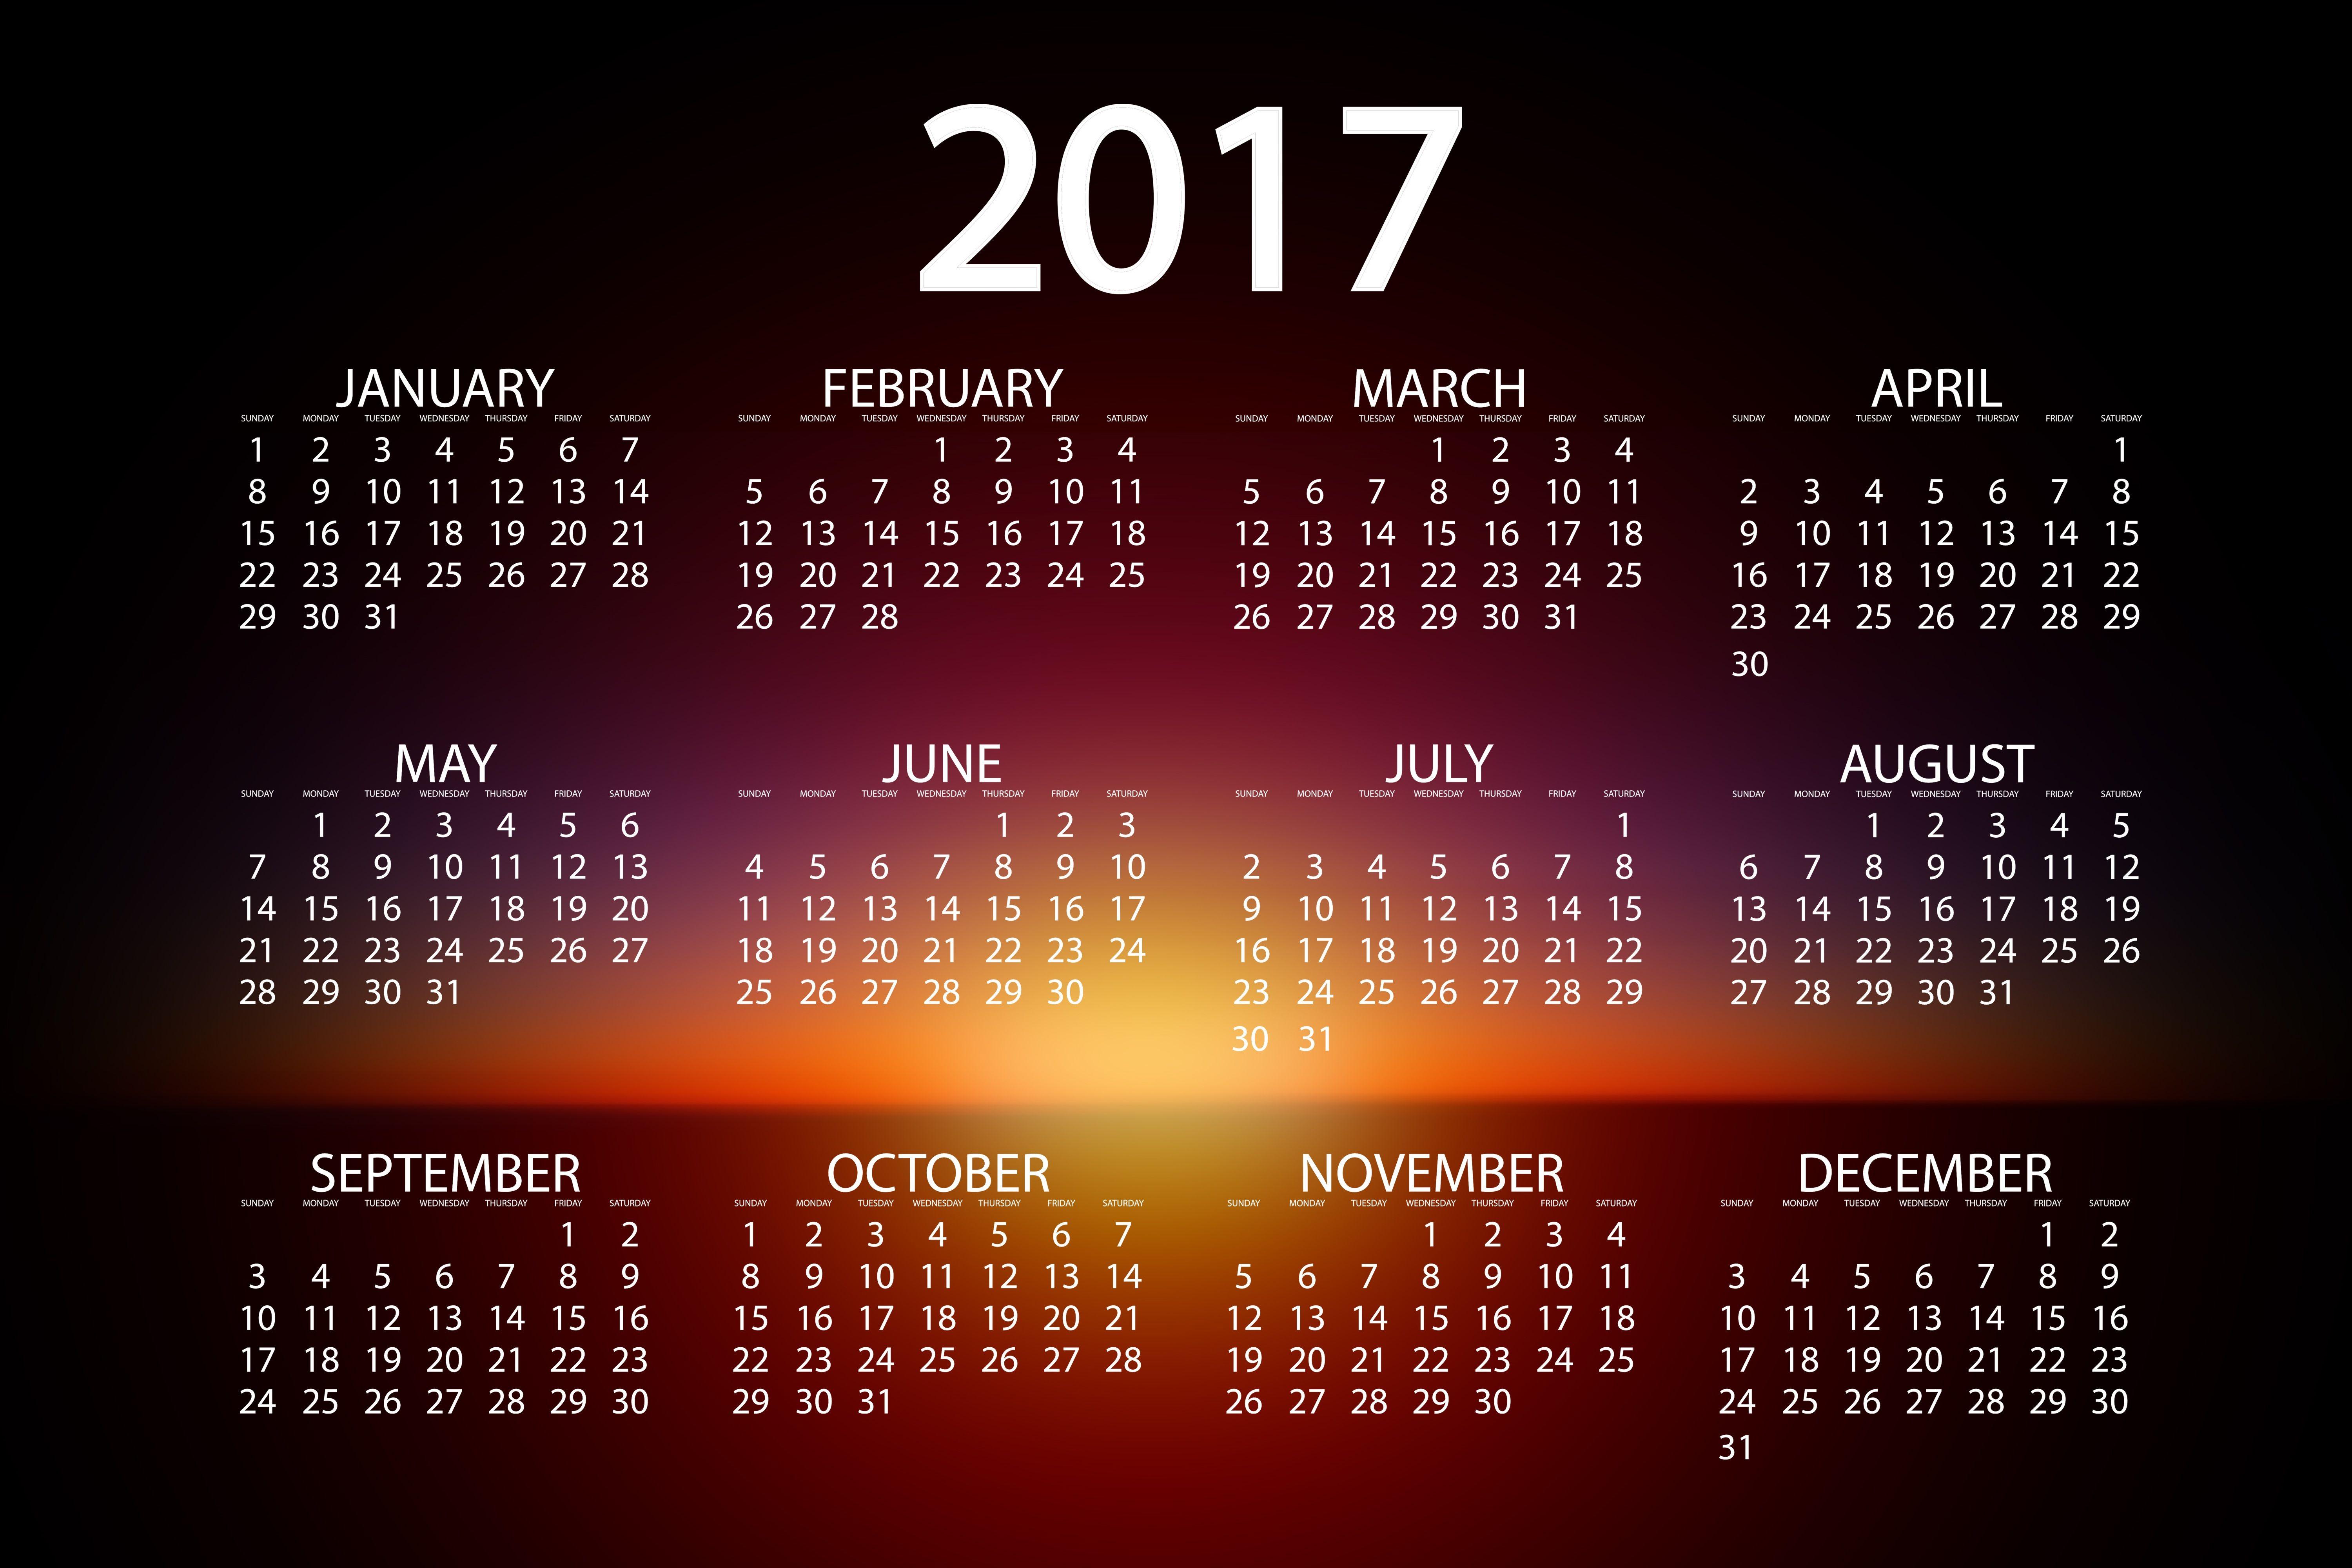 2017 Calendar Computer Wallpapers, Desktop Backgrounds